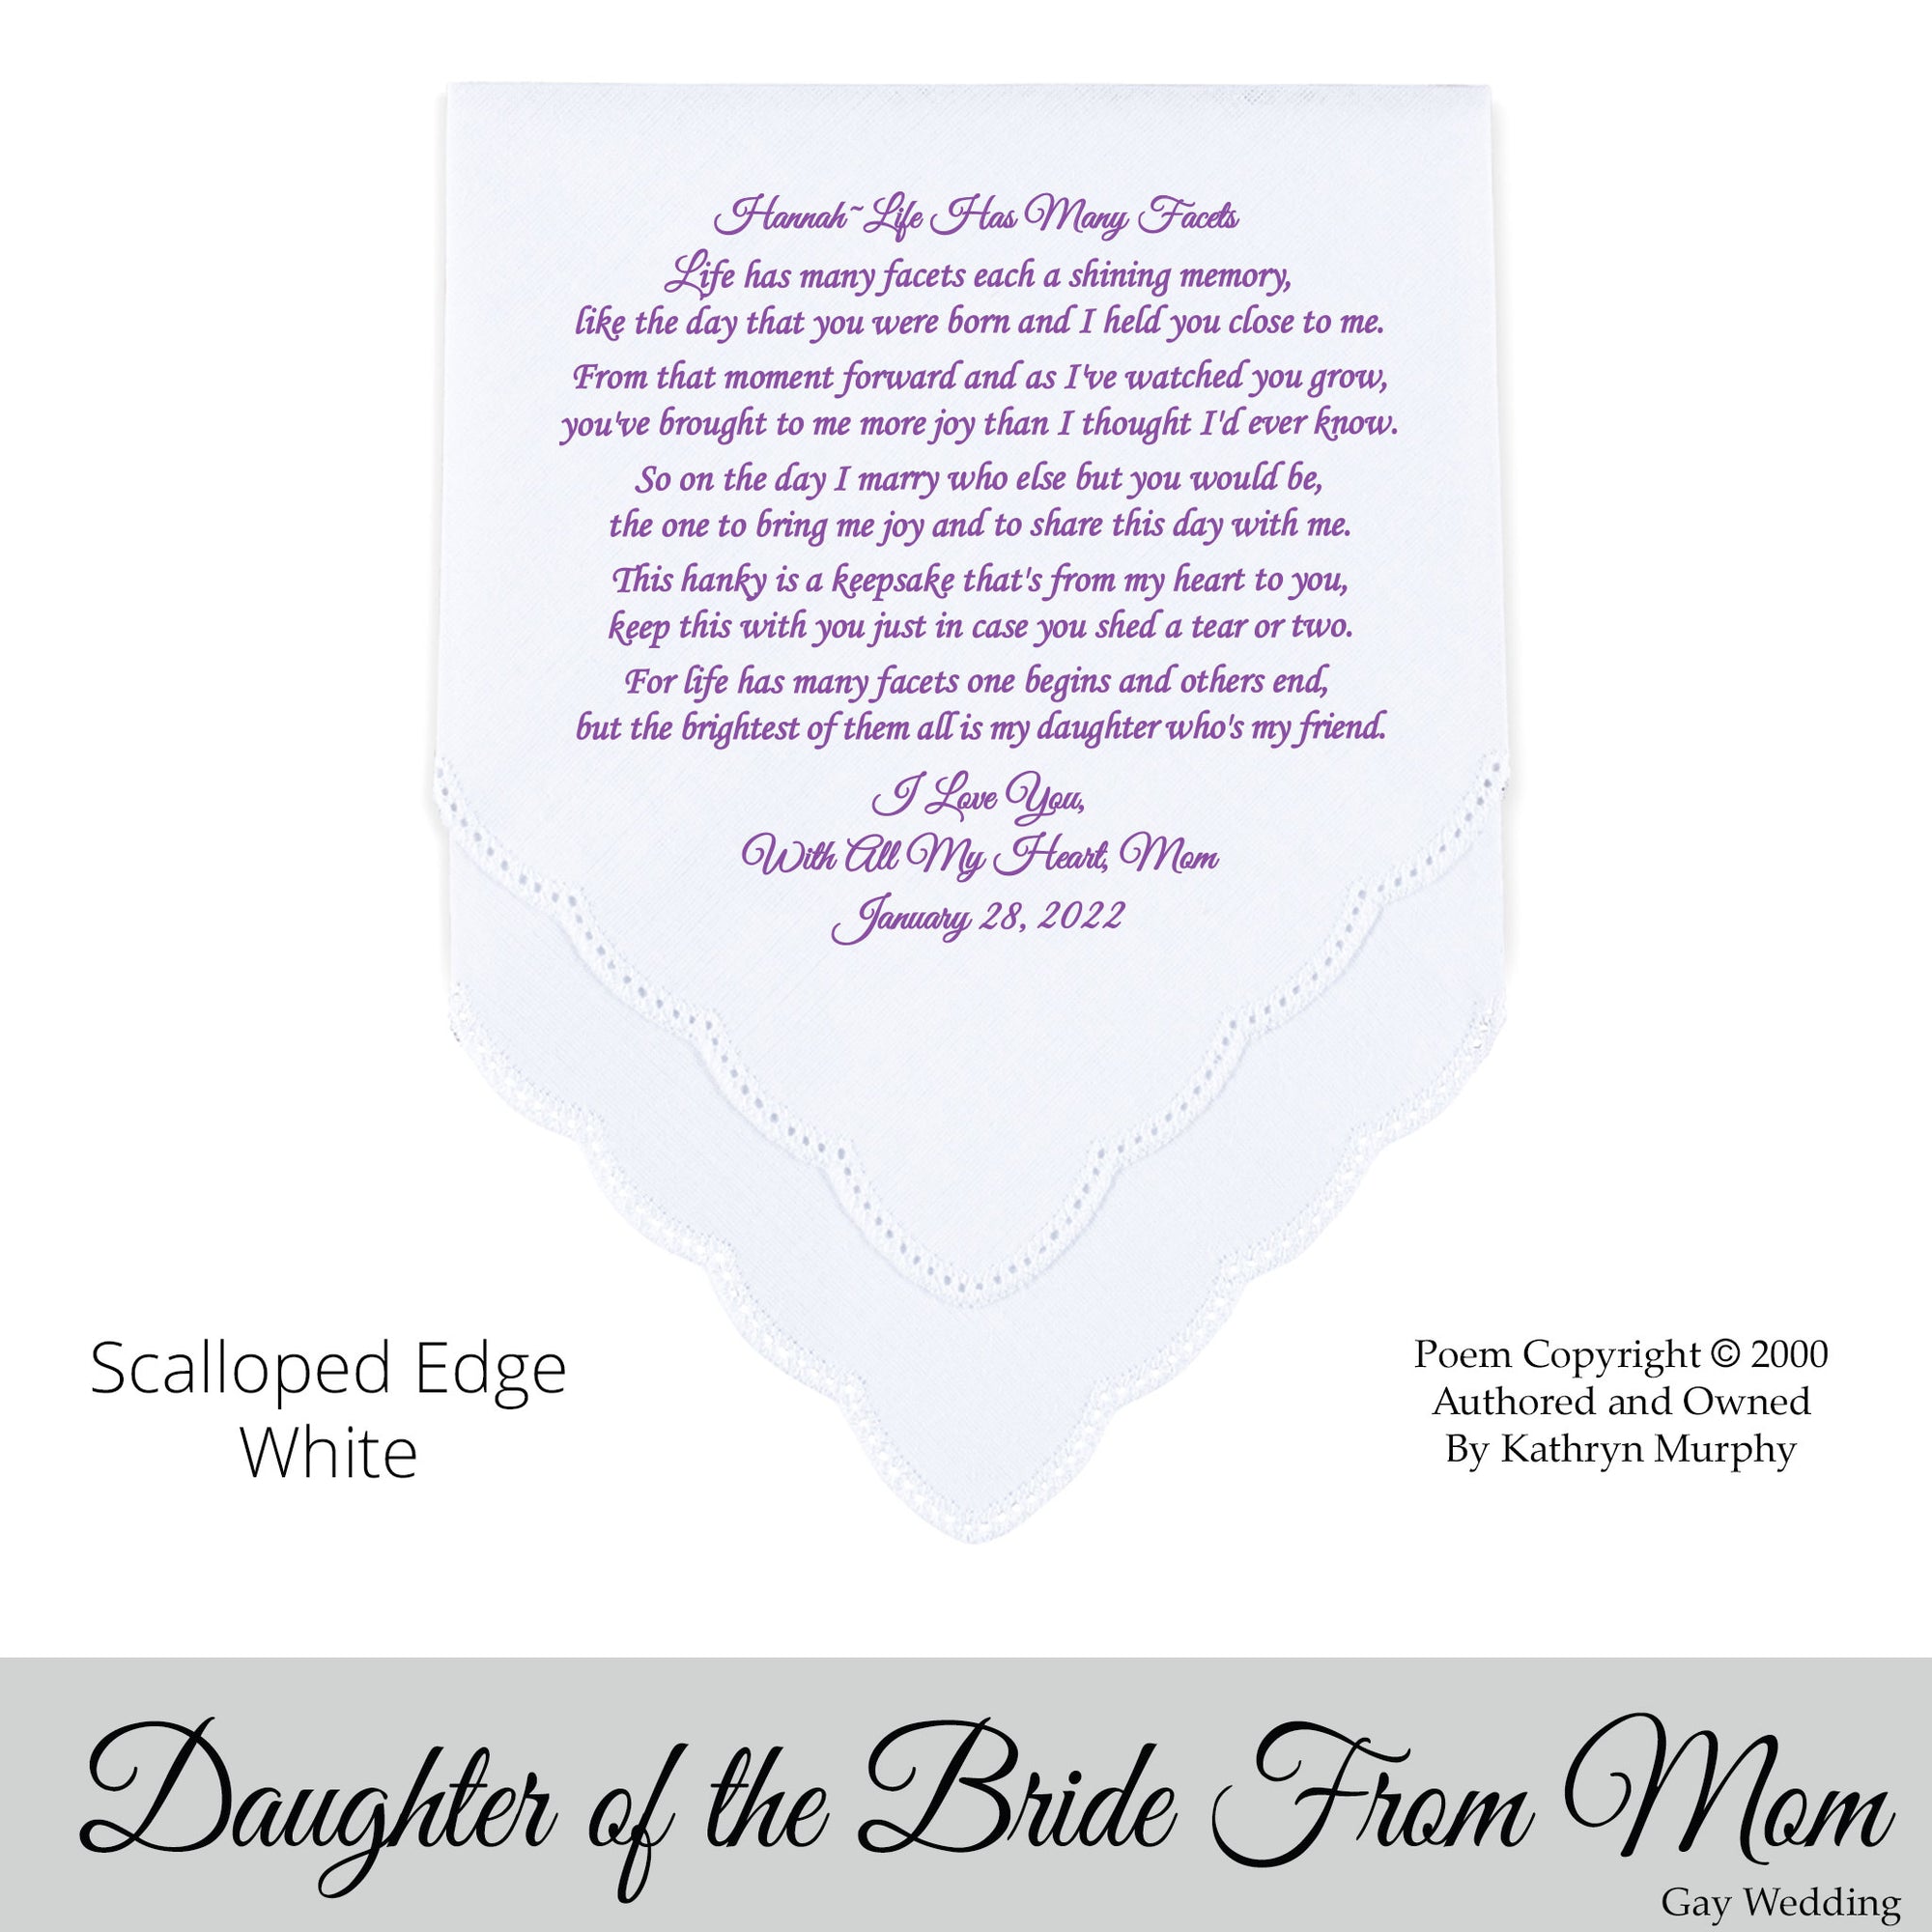 Gay Wedding Gift for the bride's daughter poem printed wedding hankie